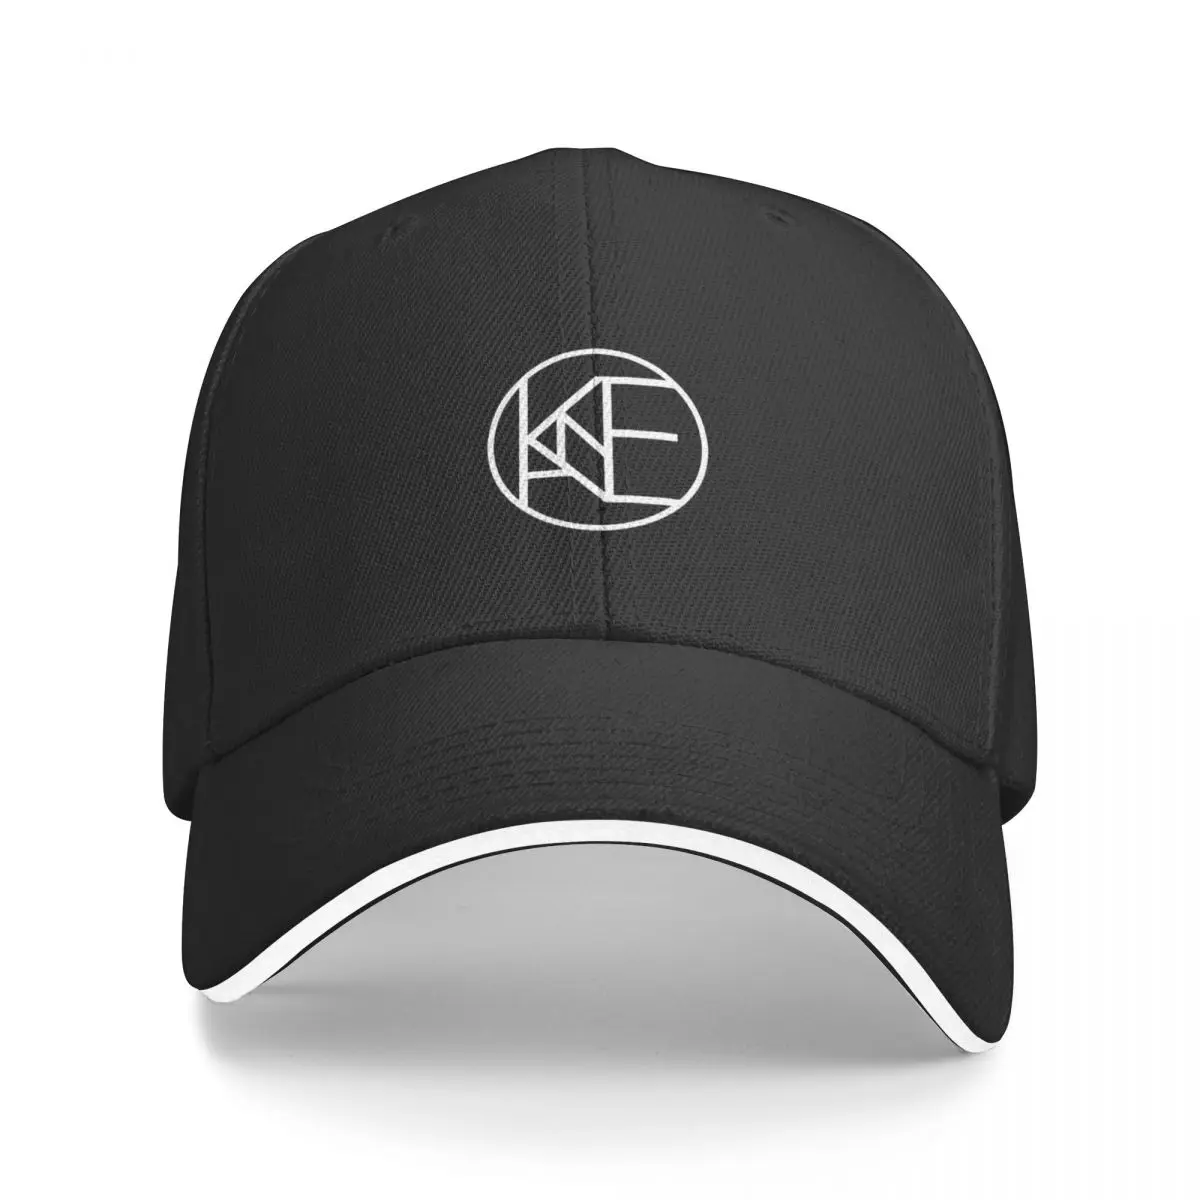 

kane brow| Perfect Gift|kane brown gift Baseball Cap Trucker Hat Hat Beach Women's Men's